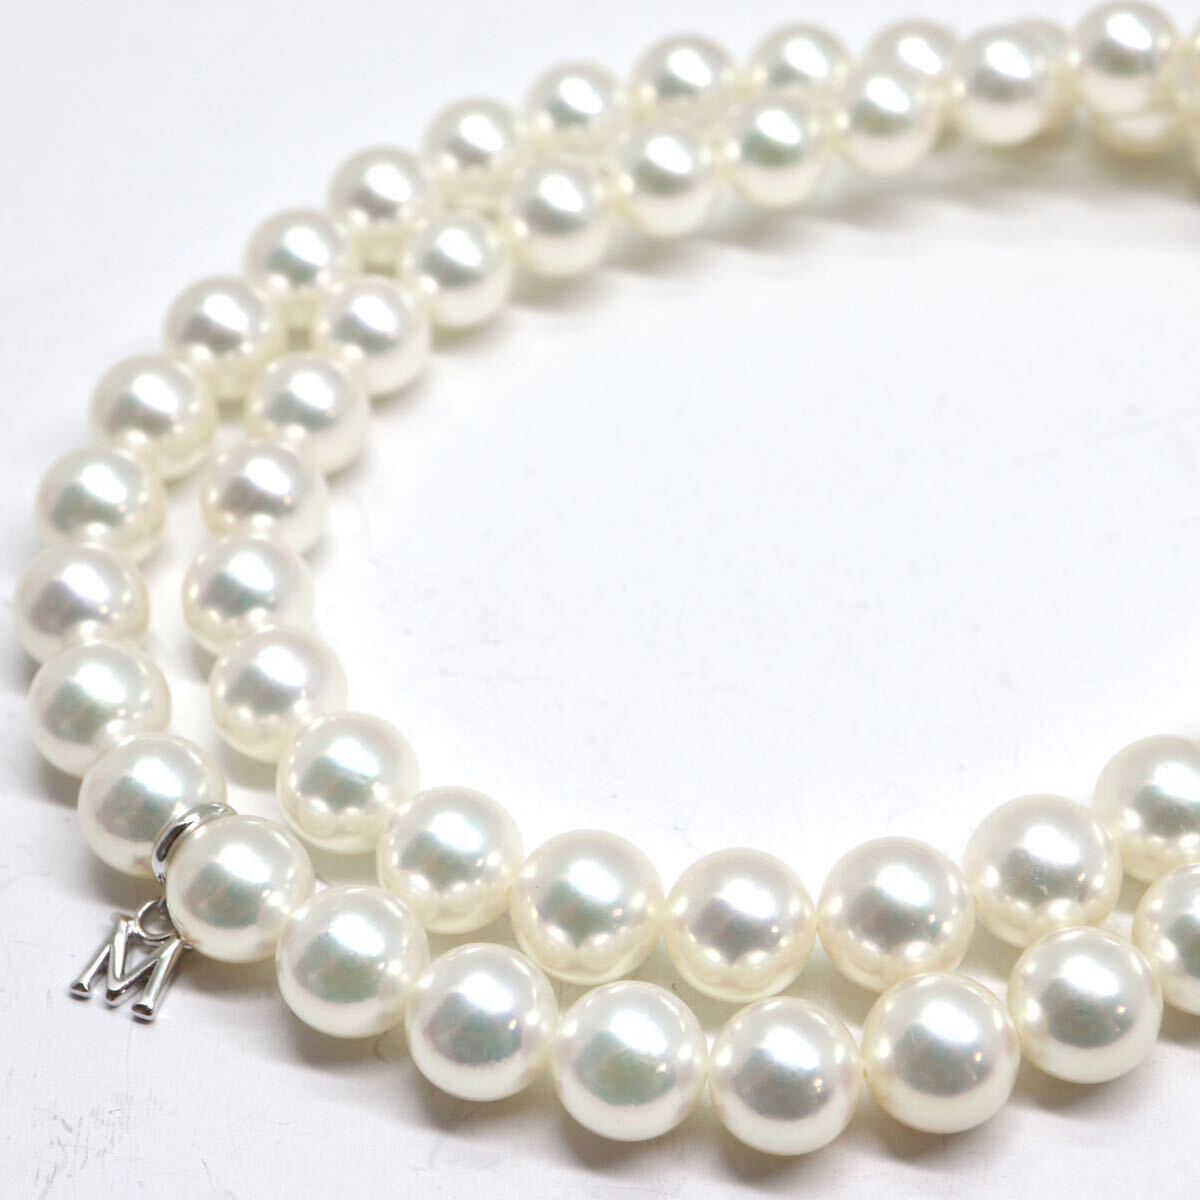 MIKIMOTO(ミキモト)箱/Mチャーム付き!!良質!!《アコヤ本真珠ネックレス》M 約7.0-7.5mm珠 33.0g 約42.5cm pearl necklace jewelry FA5/FB0_画像6